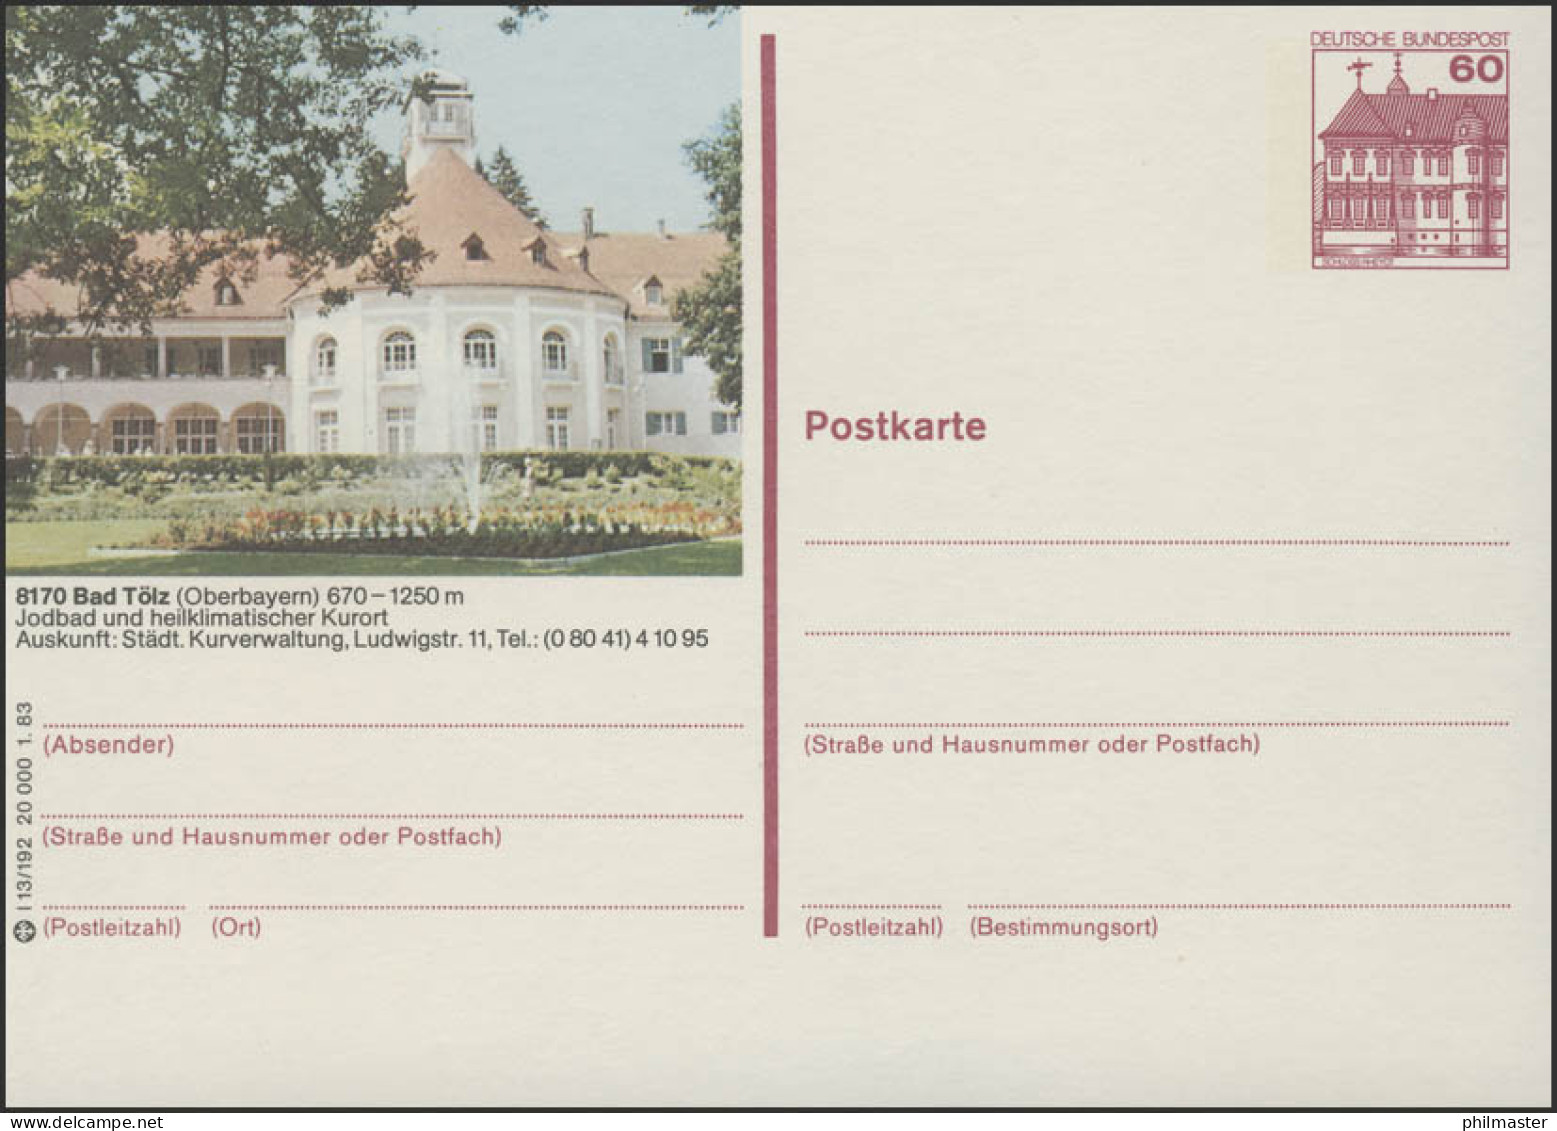 P138-l13/192 8170 Bad Tölz, Kurmittelhaus ** - Illustrated Postcards - Mint